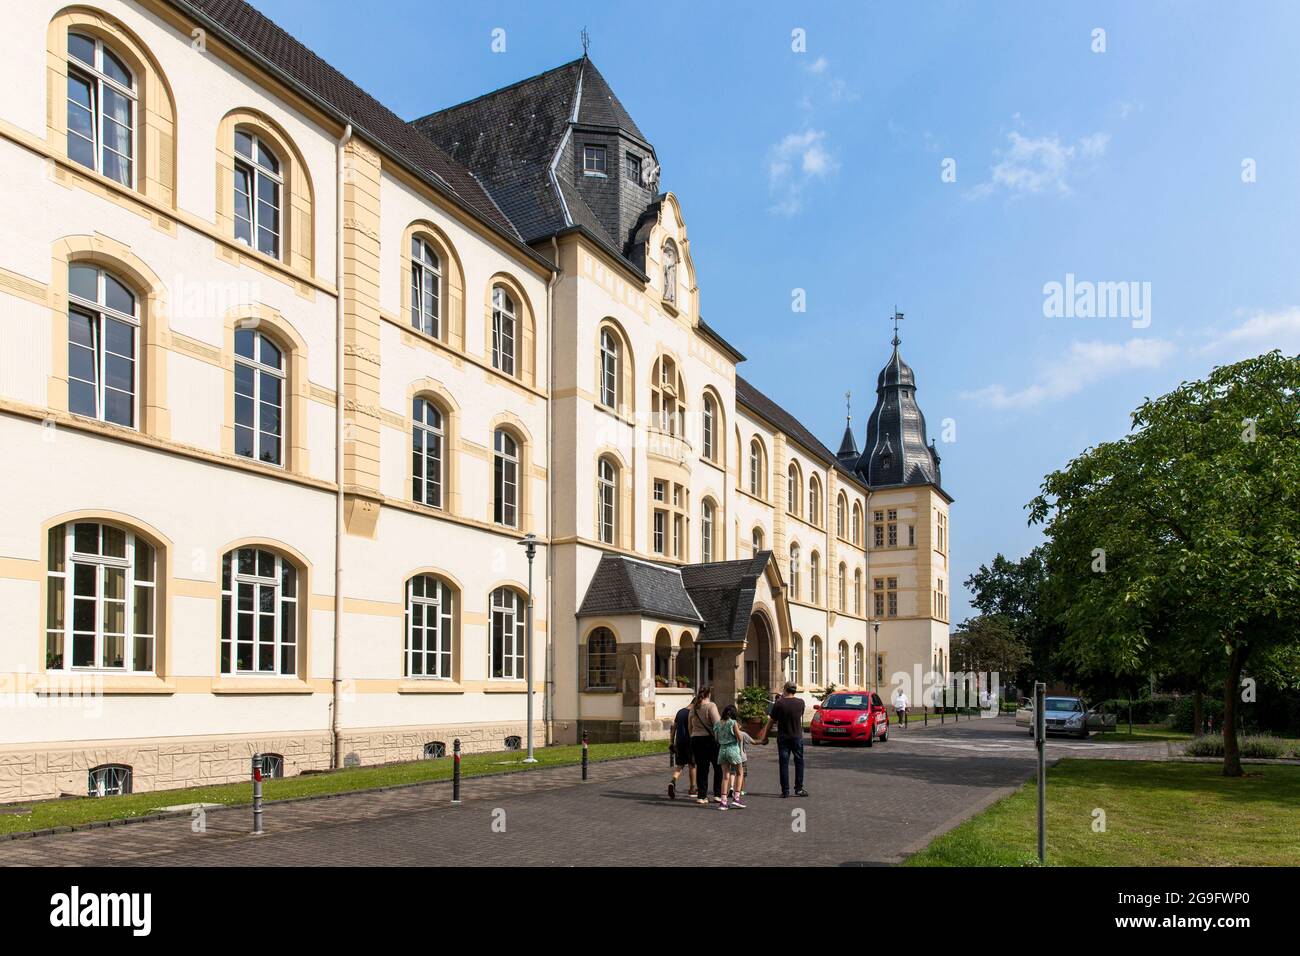 L'ospedale Alexianer nel distretto di Porz-ENSEN, Colonia, Germania. Das Alexianer Krankenhaus a Porz-ENSEN, Koeln, Germania. Foto Stock